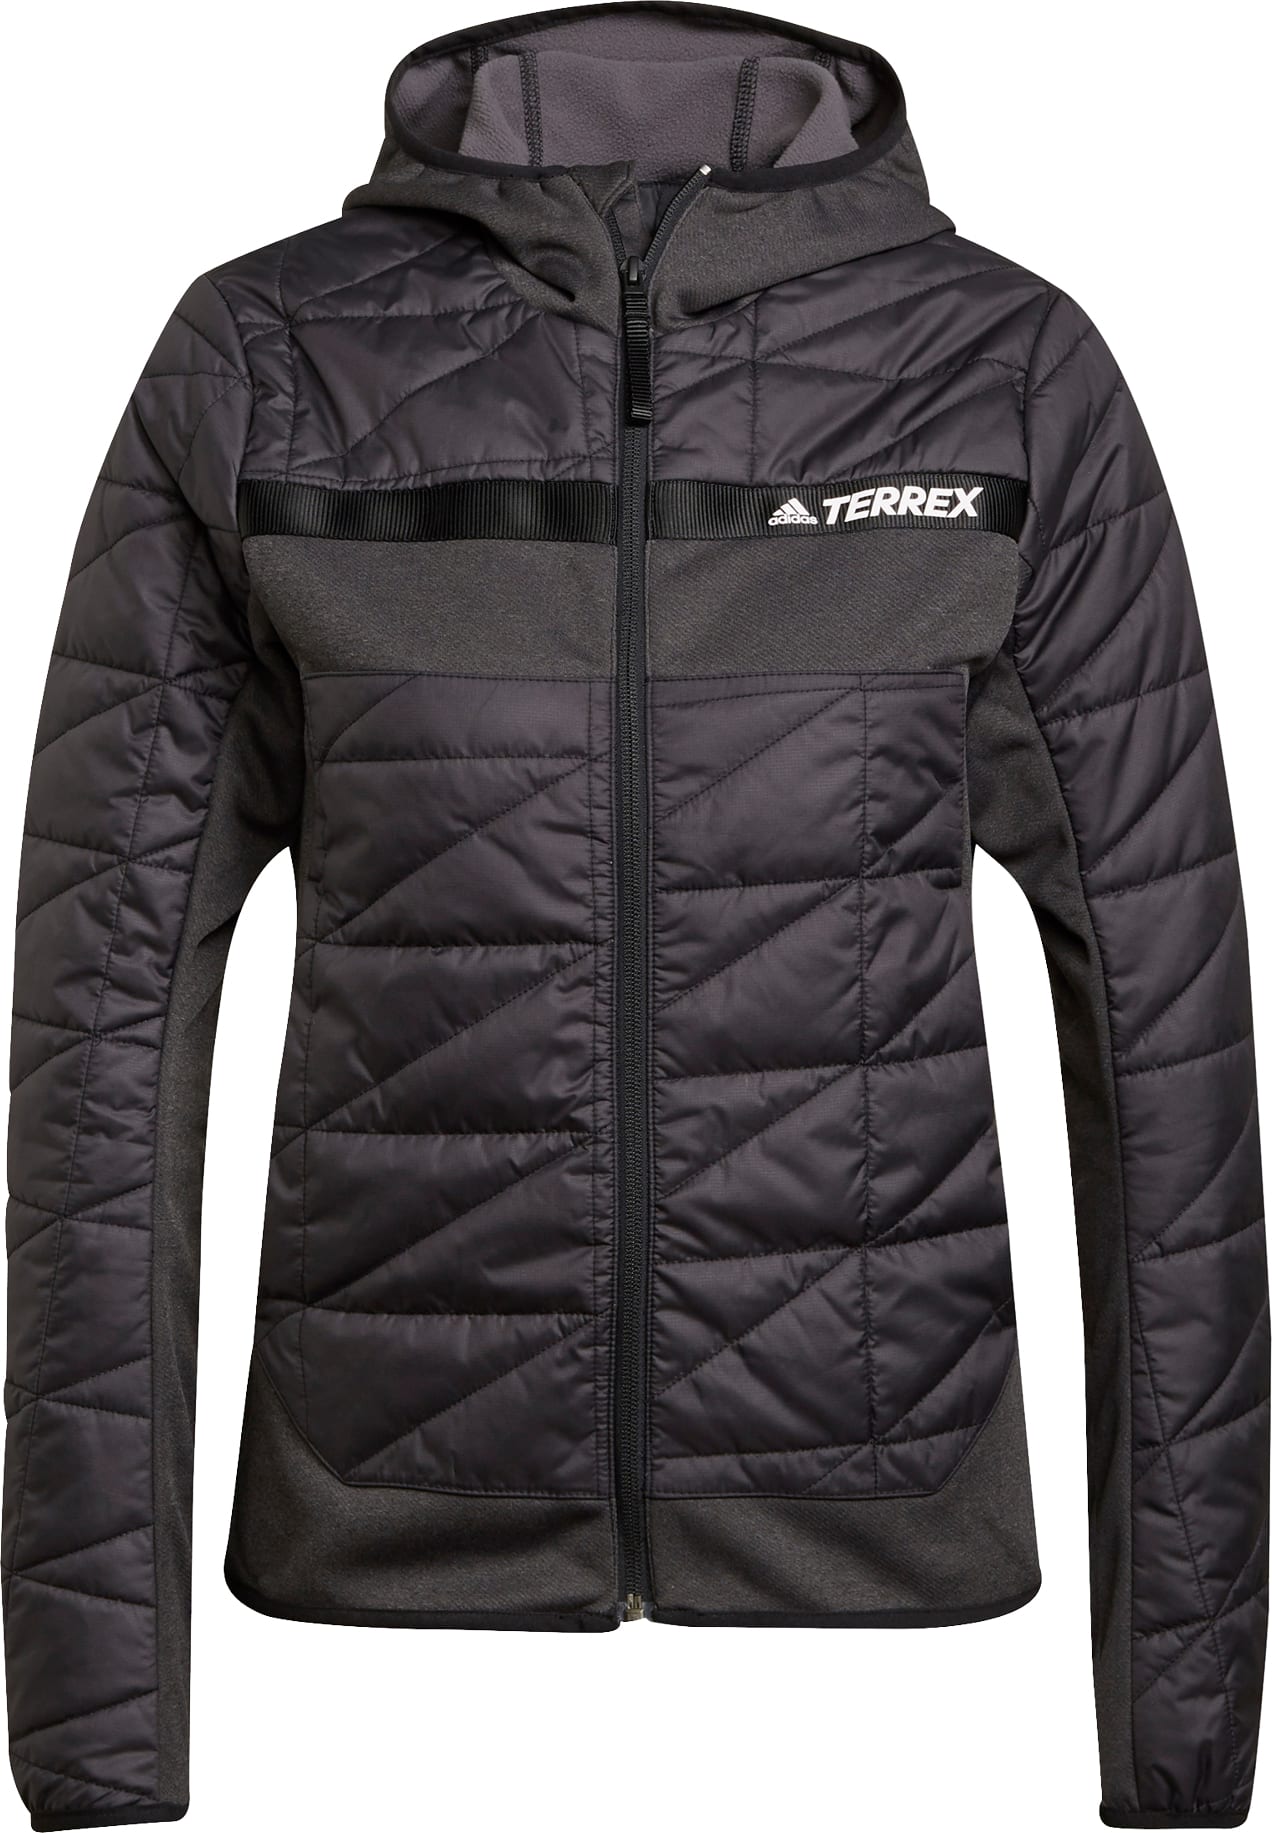 Køb Adidas Women's Terrex Multi Primegreen Hybrid Insulated Jacket fra